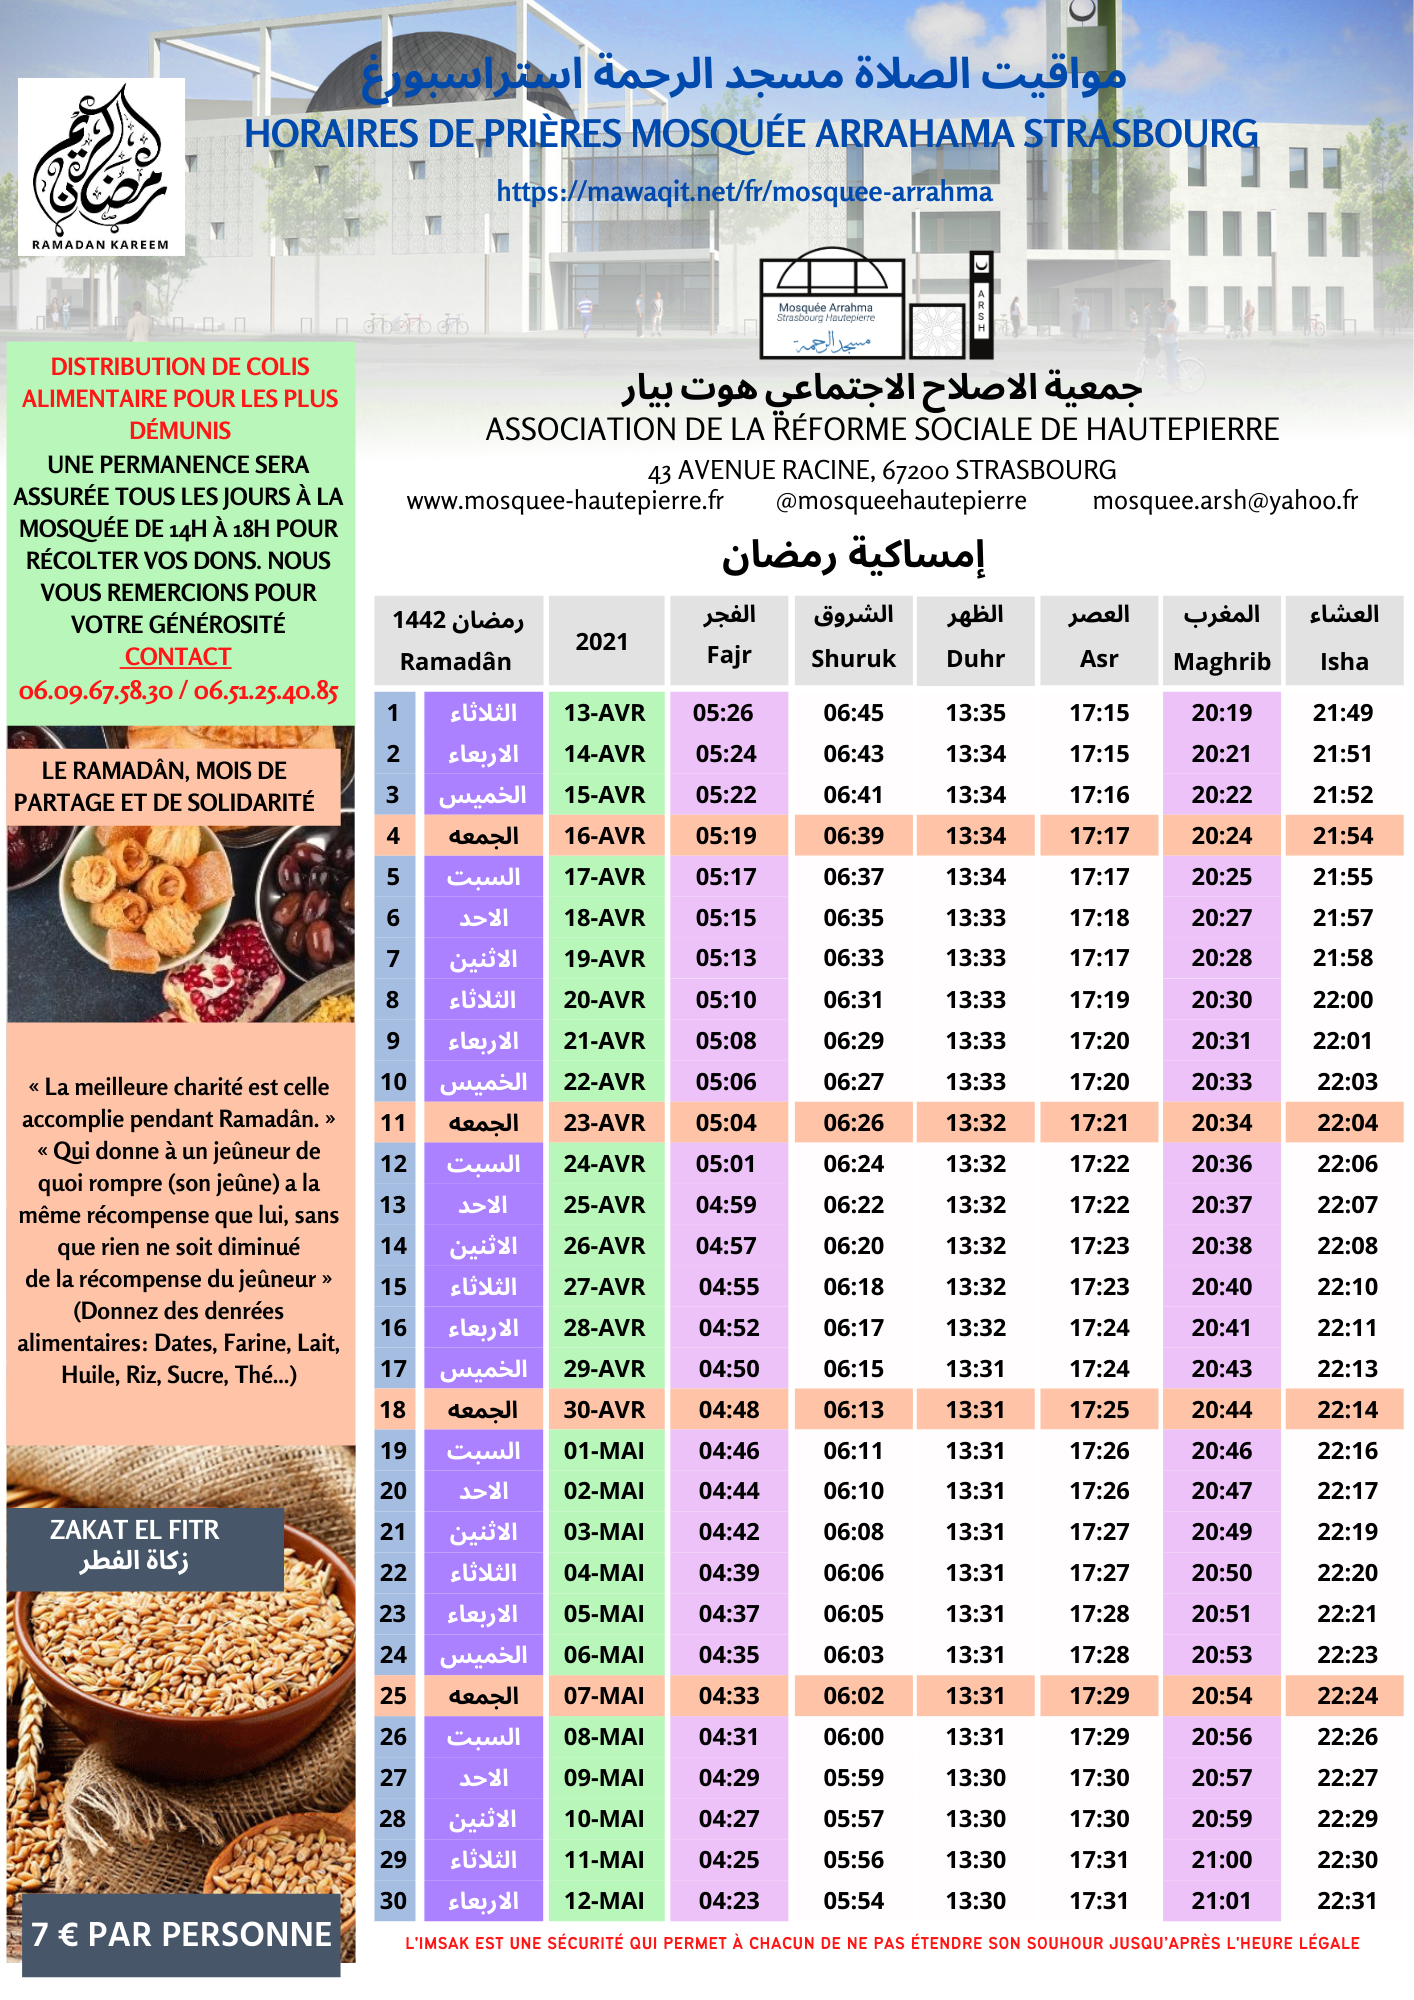 Calendrier horaires du Ramadan - GML